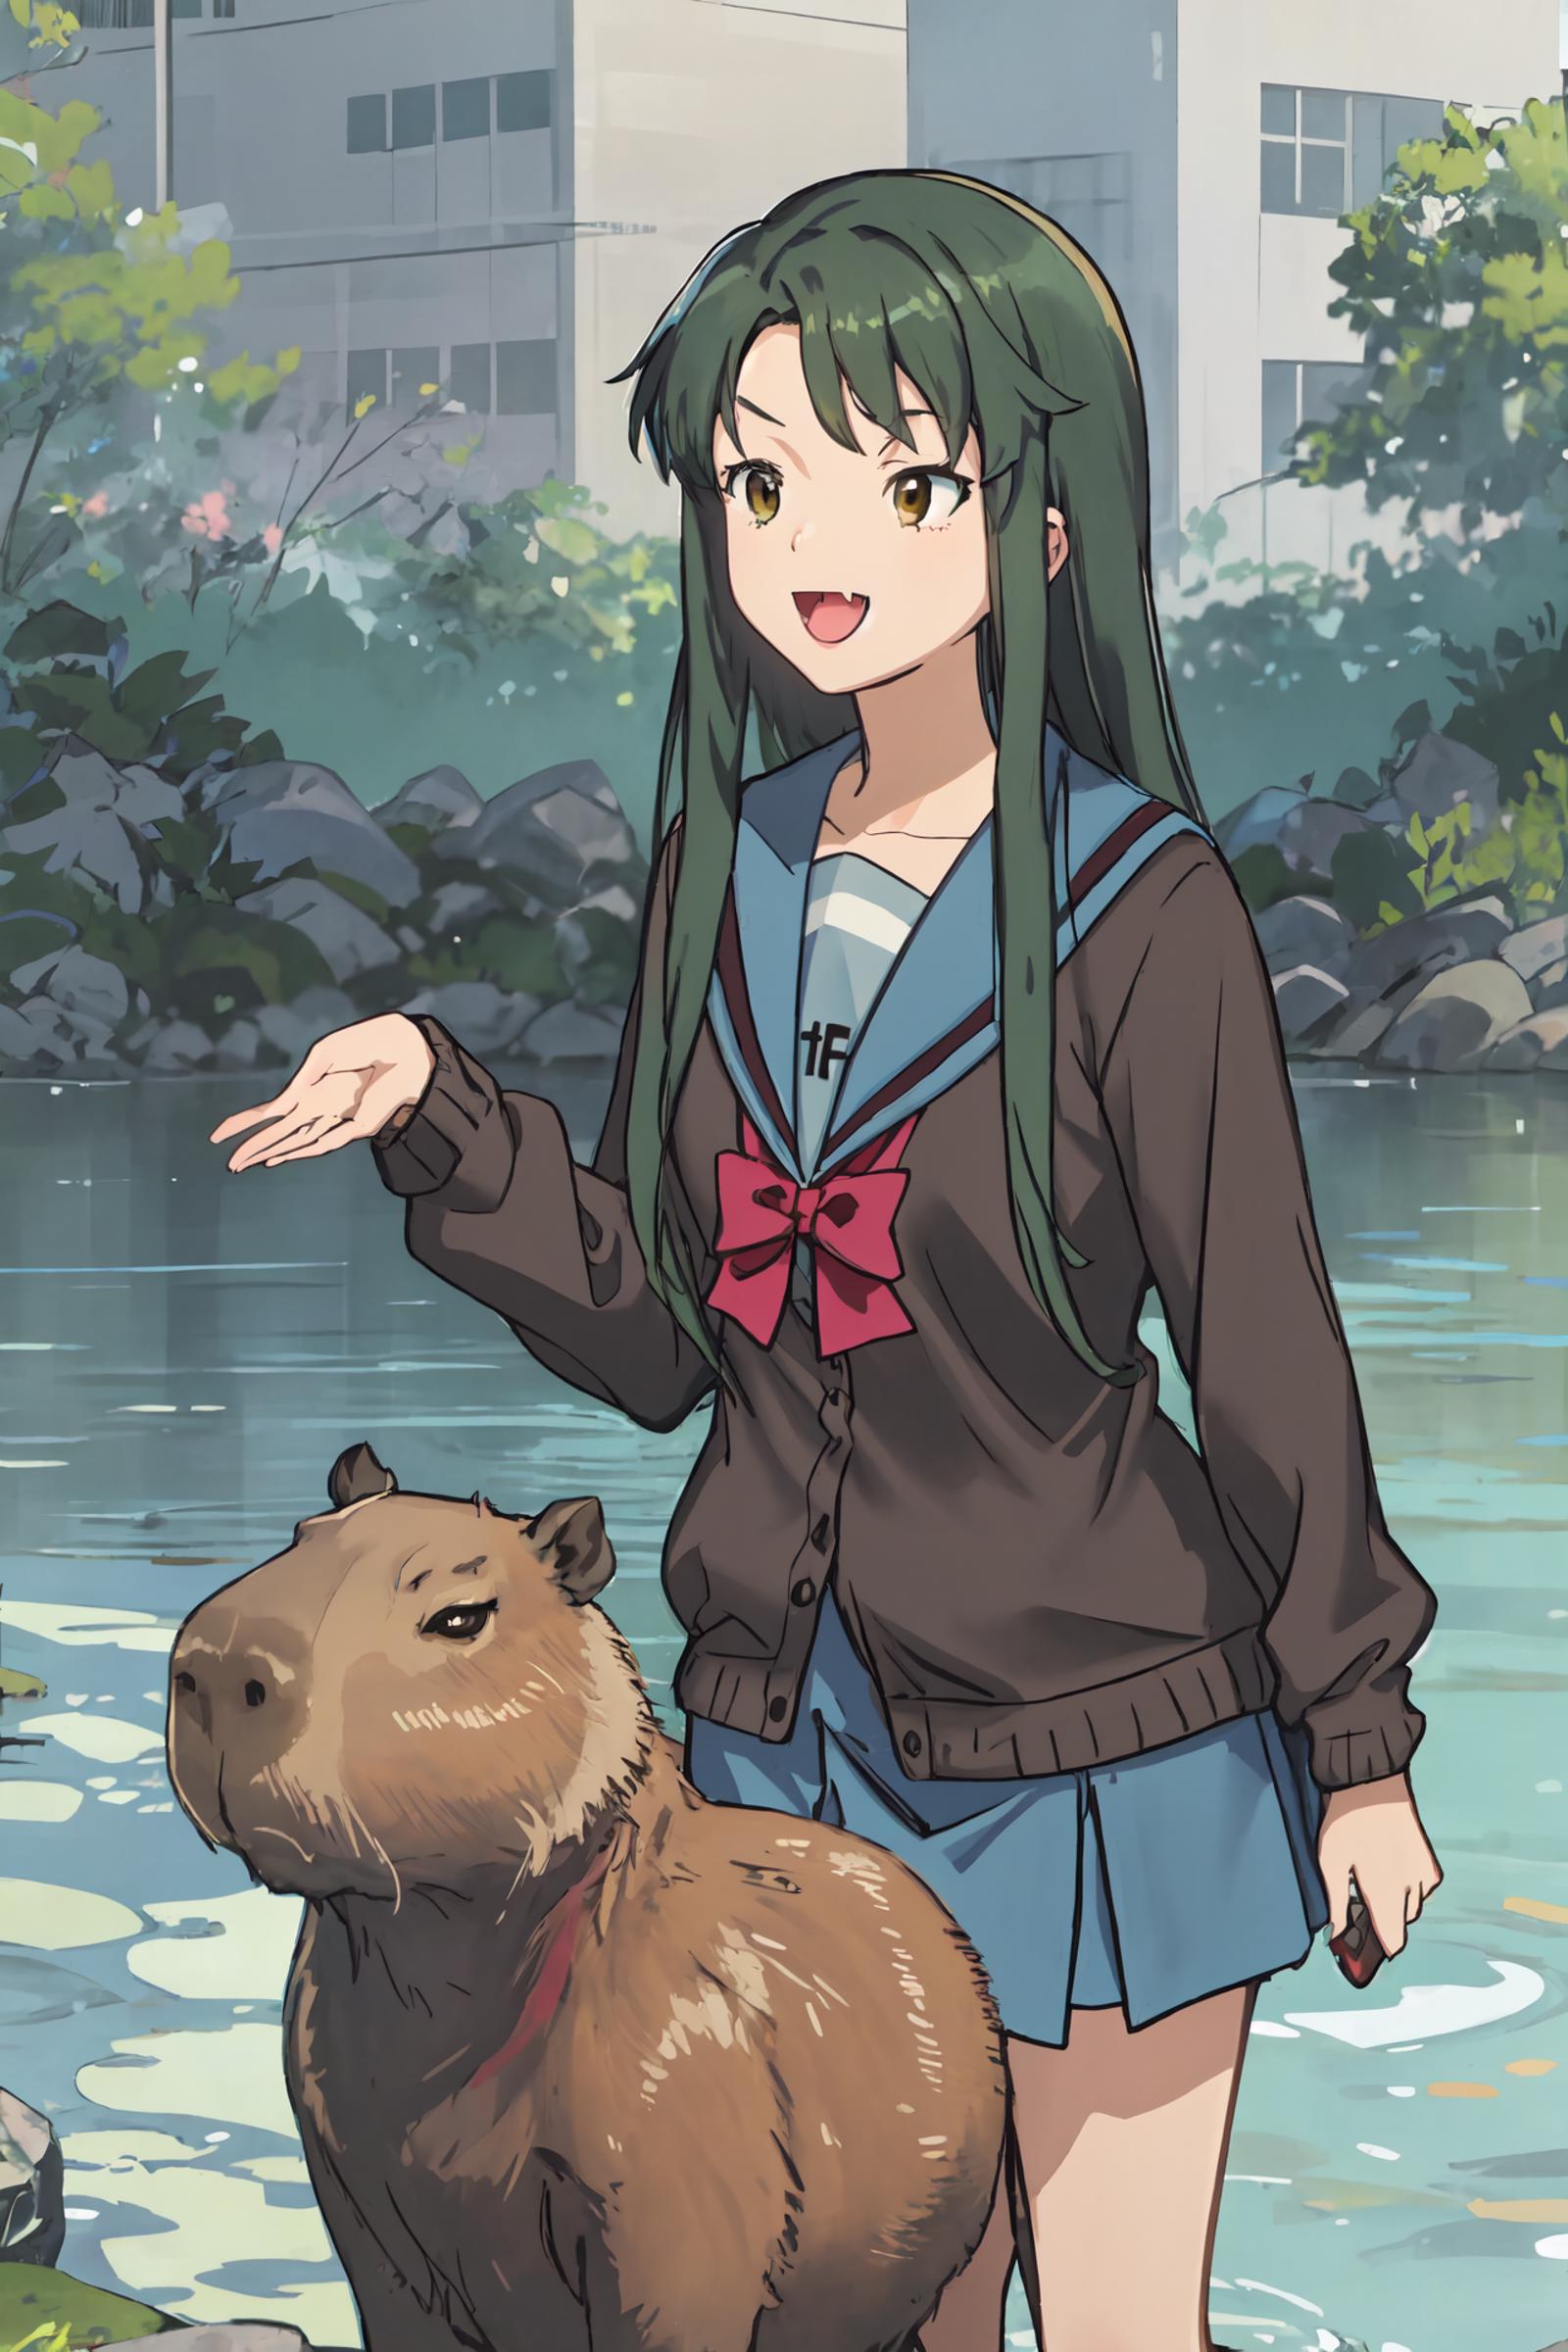 Capybara image by SOSDAN